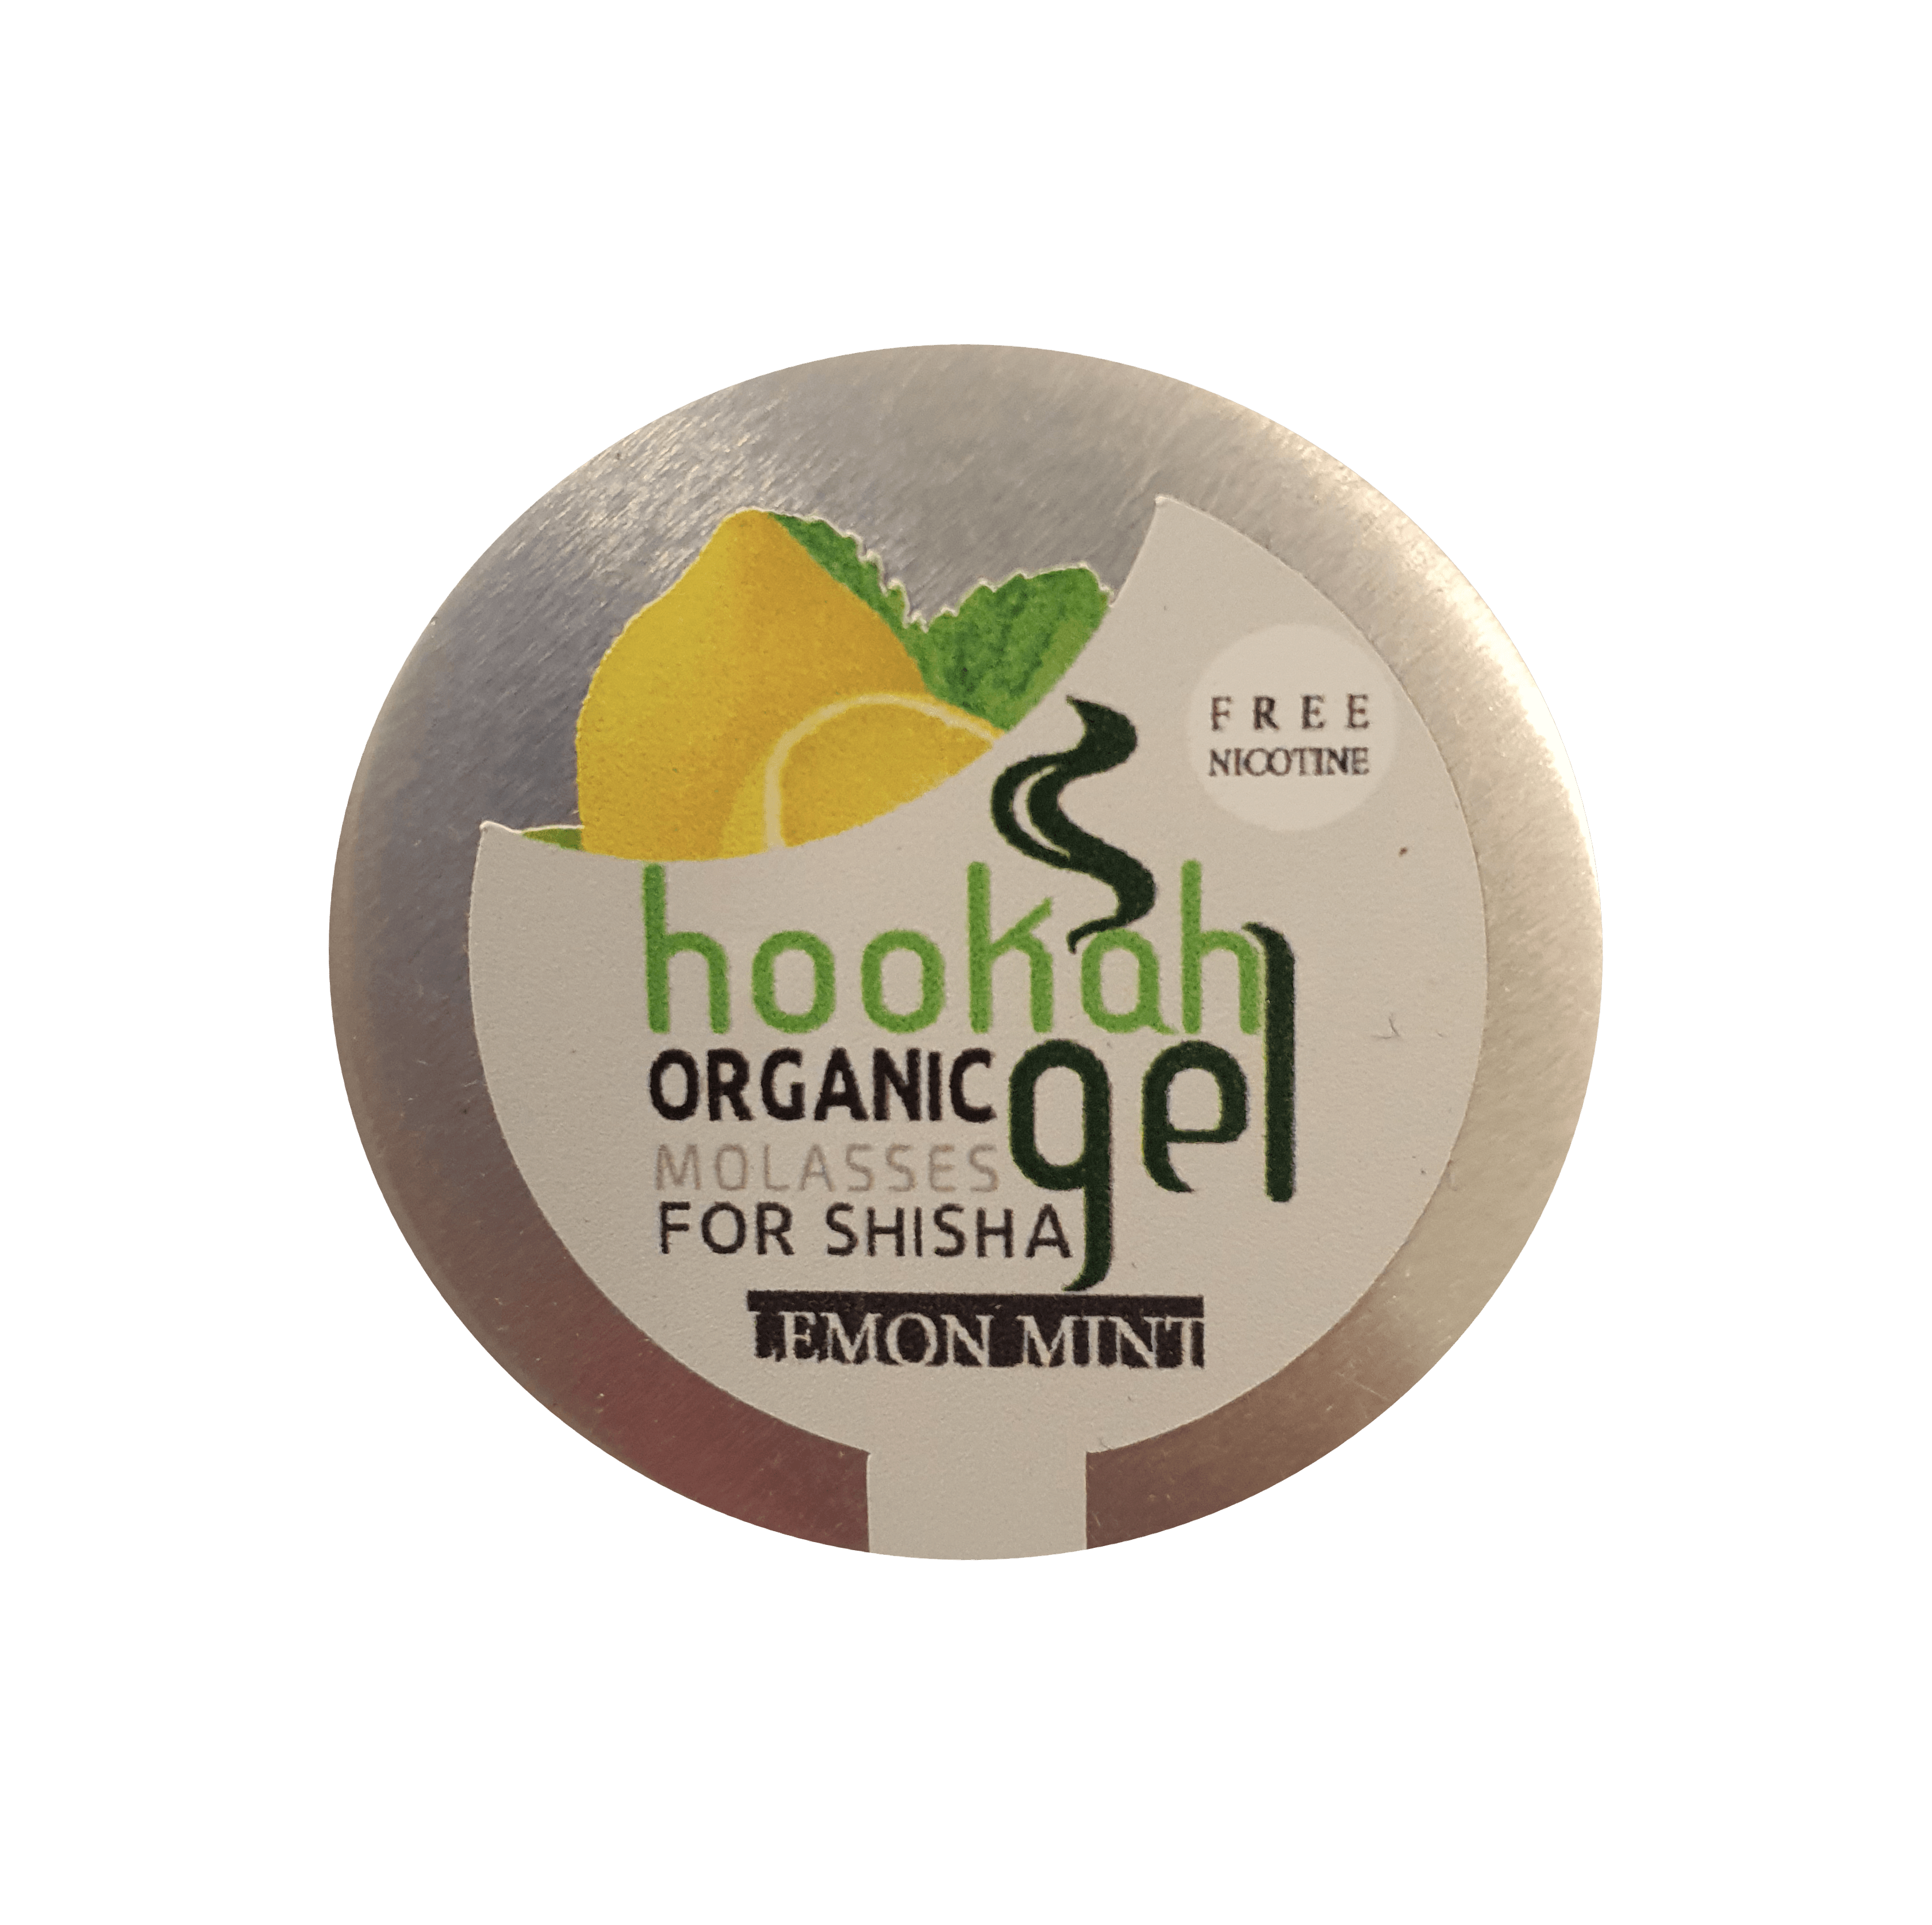 Lemon Mint Hookah Organic Gel Molasses For Shisha - Shishabox